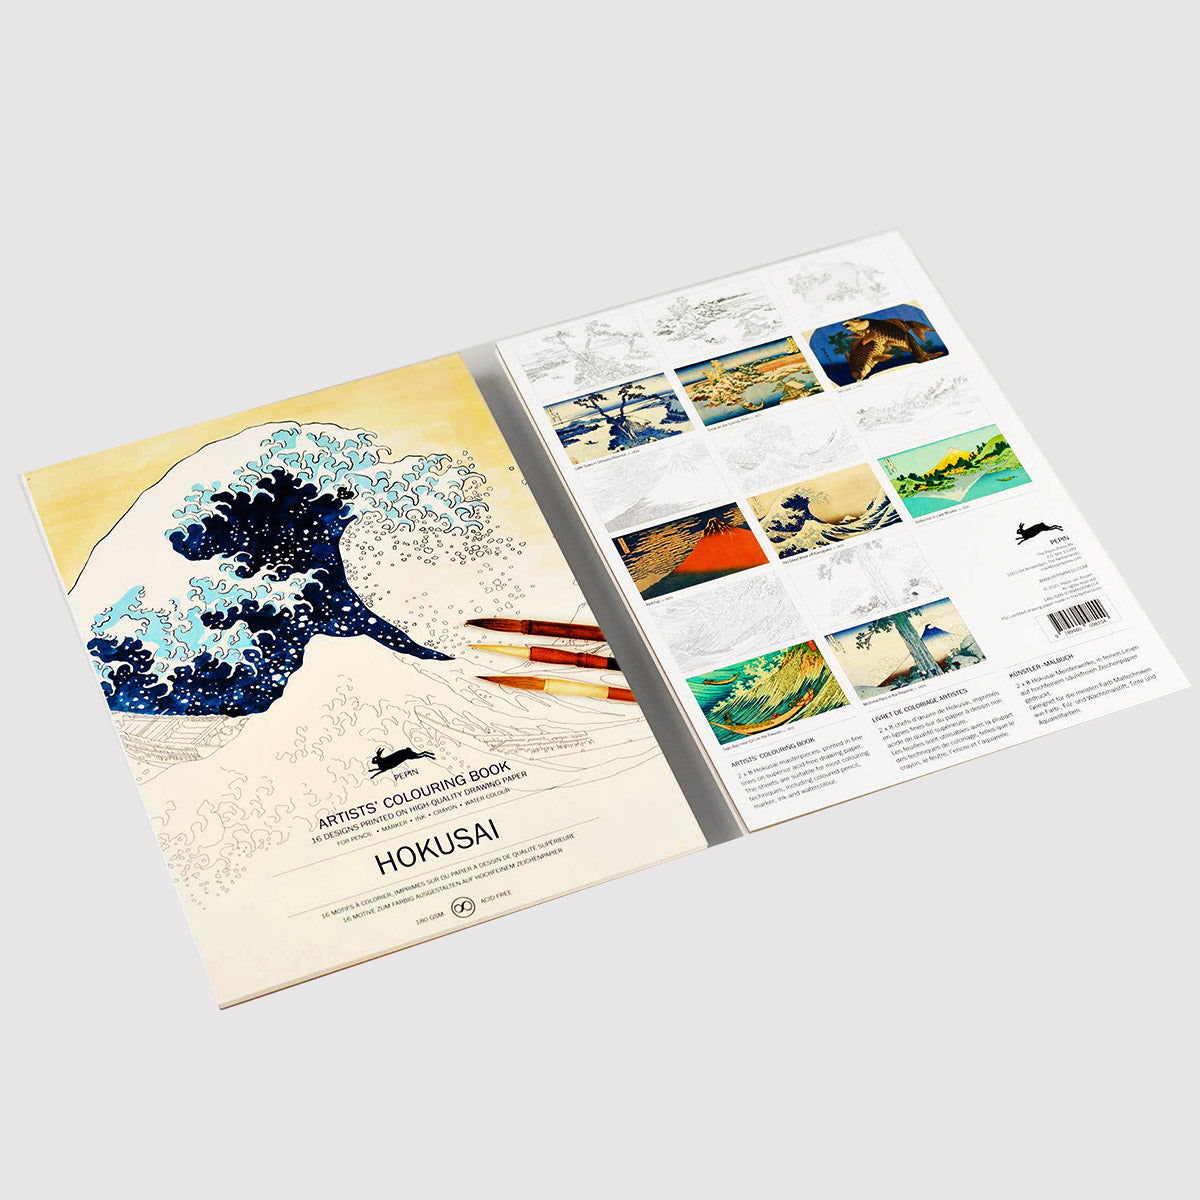 Hokusai's Serenity: A Coloring Book Inspired by Katsushika Hokusai